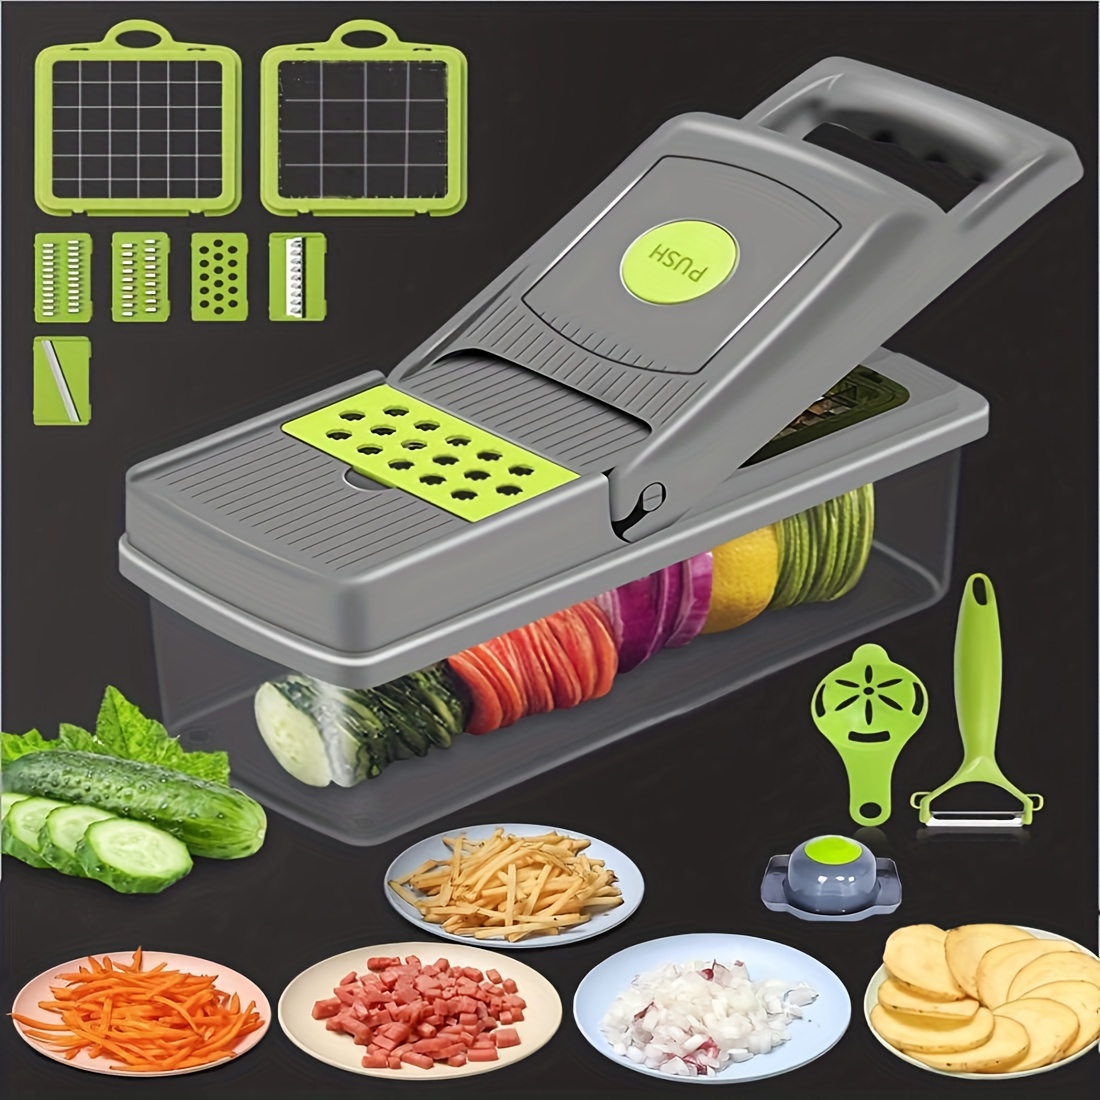 16-in-1 Multifunctional Vegetable Cutter Shredder Vegetable Dicer